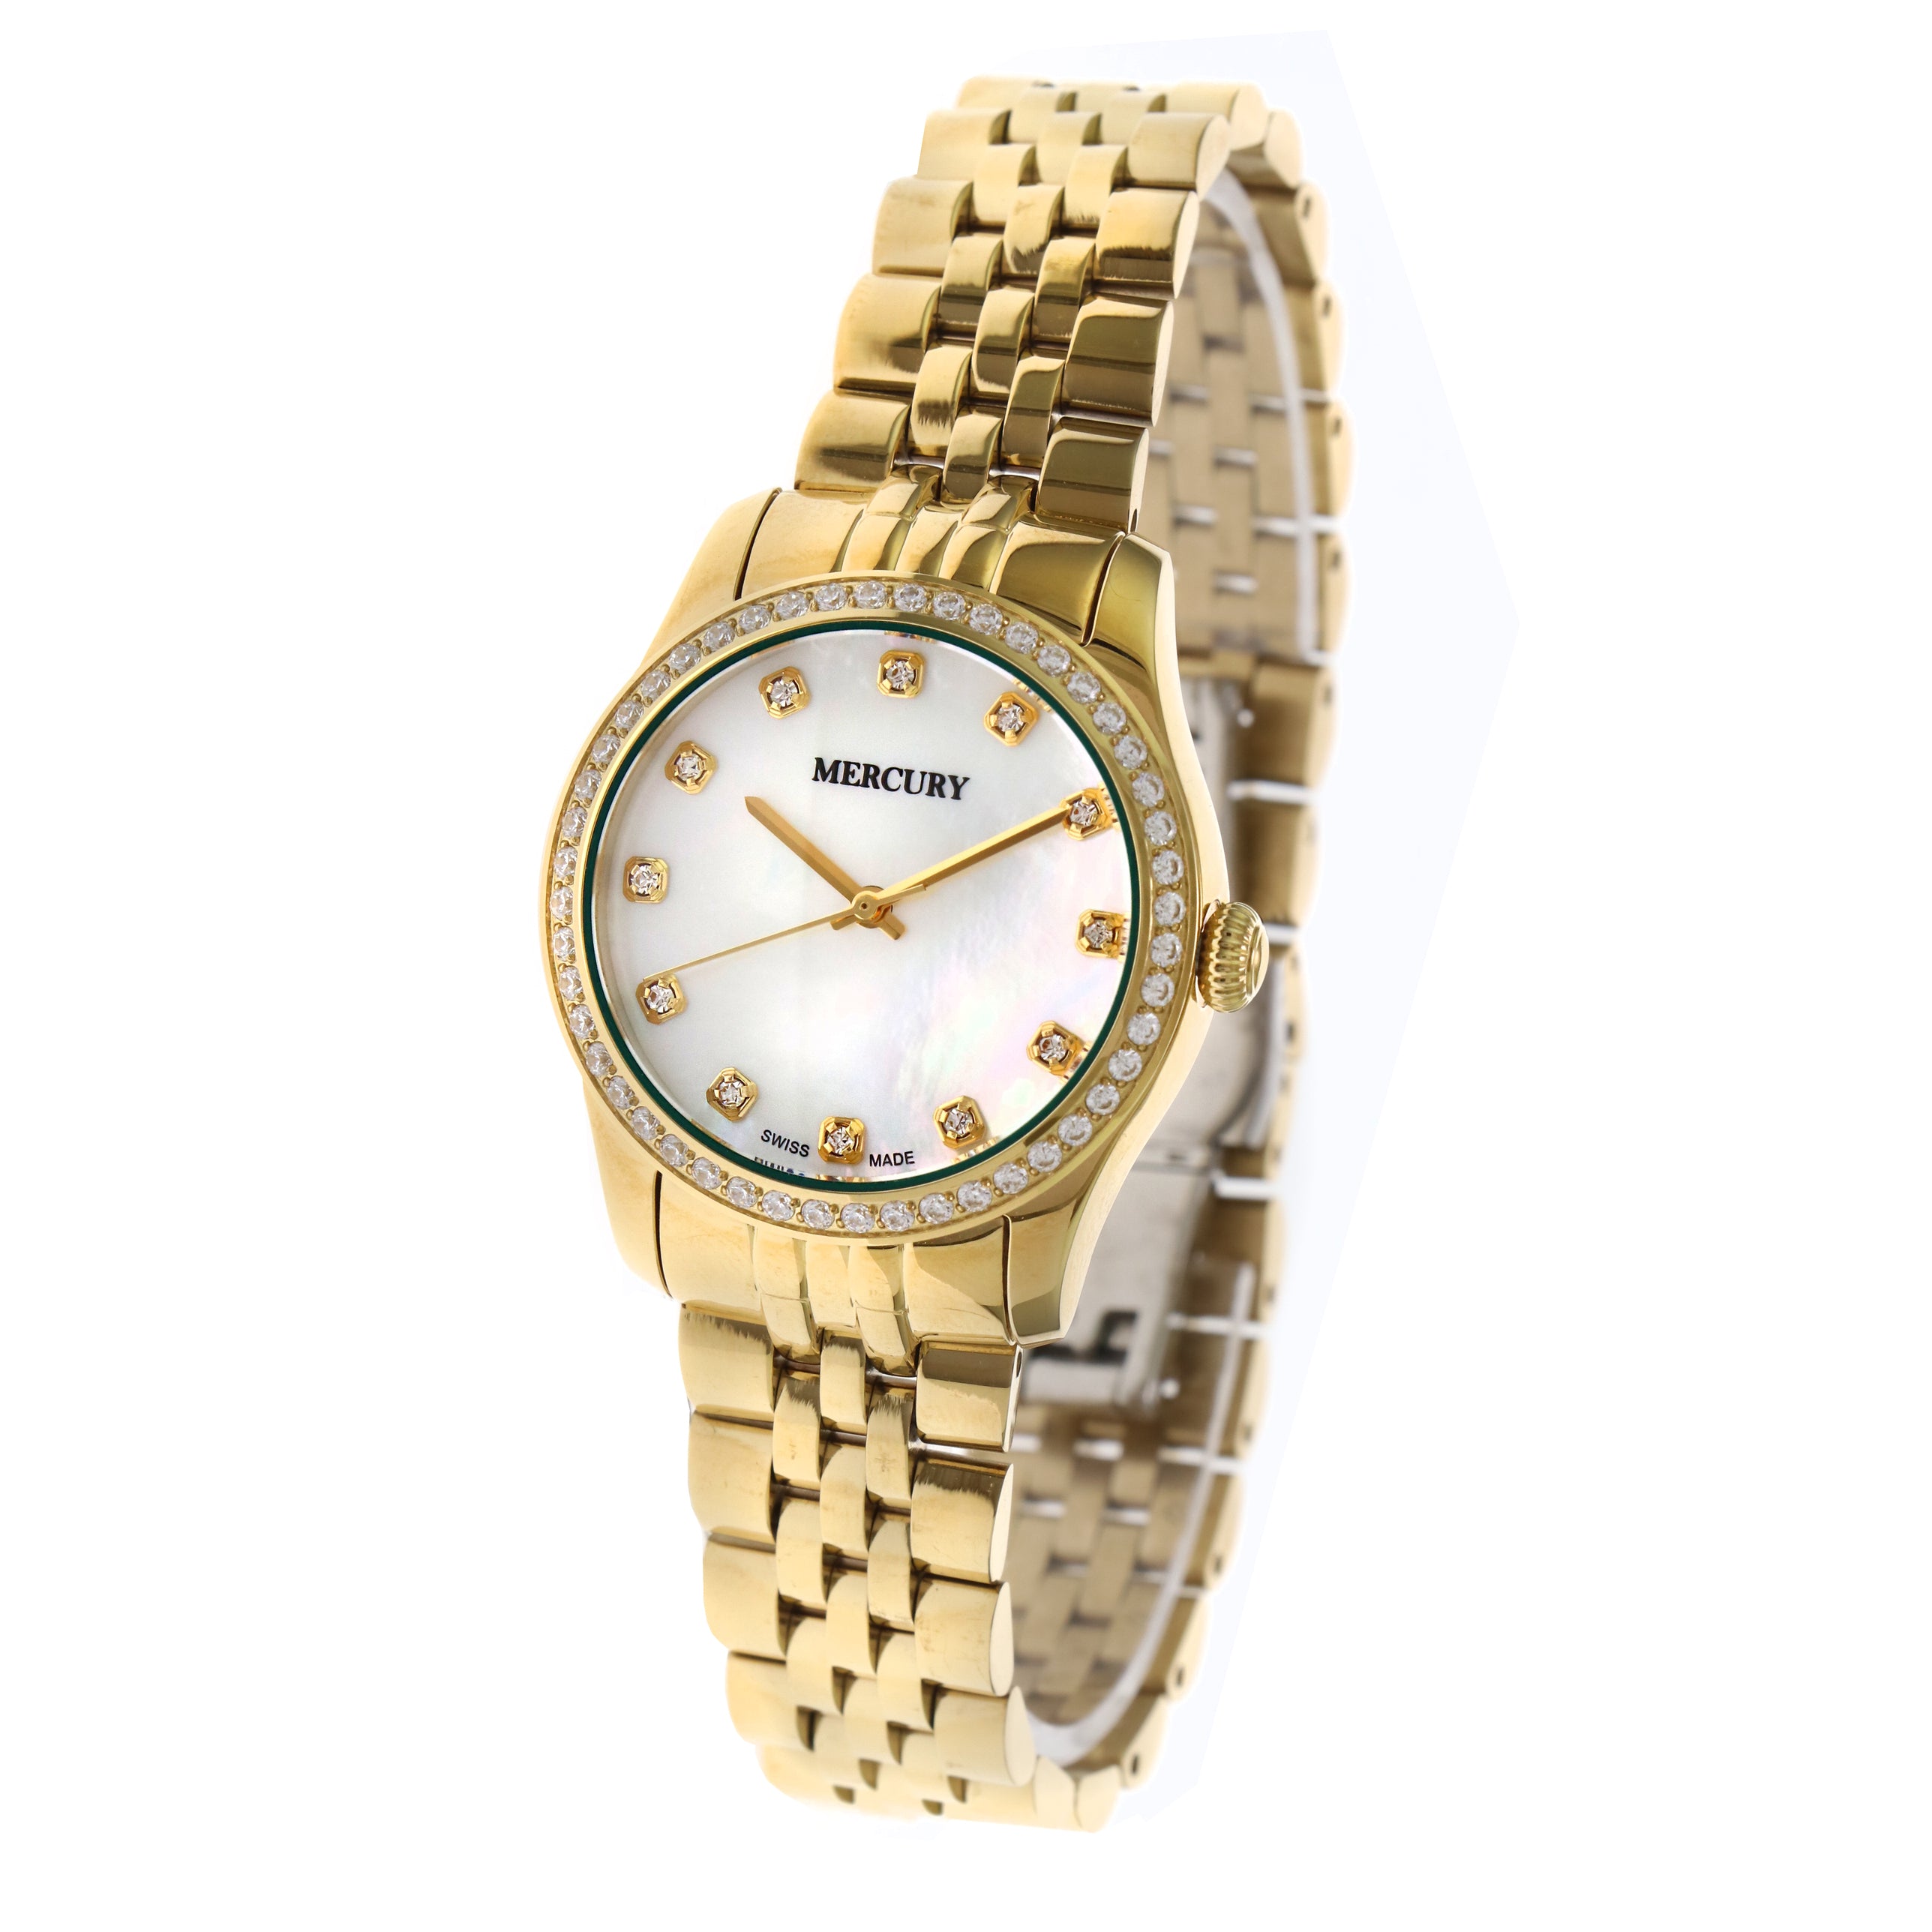 Mercury Women's Swiss Quartz Watch with Pearly White Dial - MER-0023